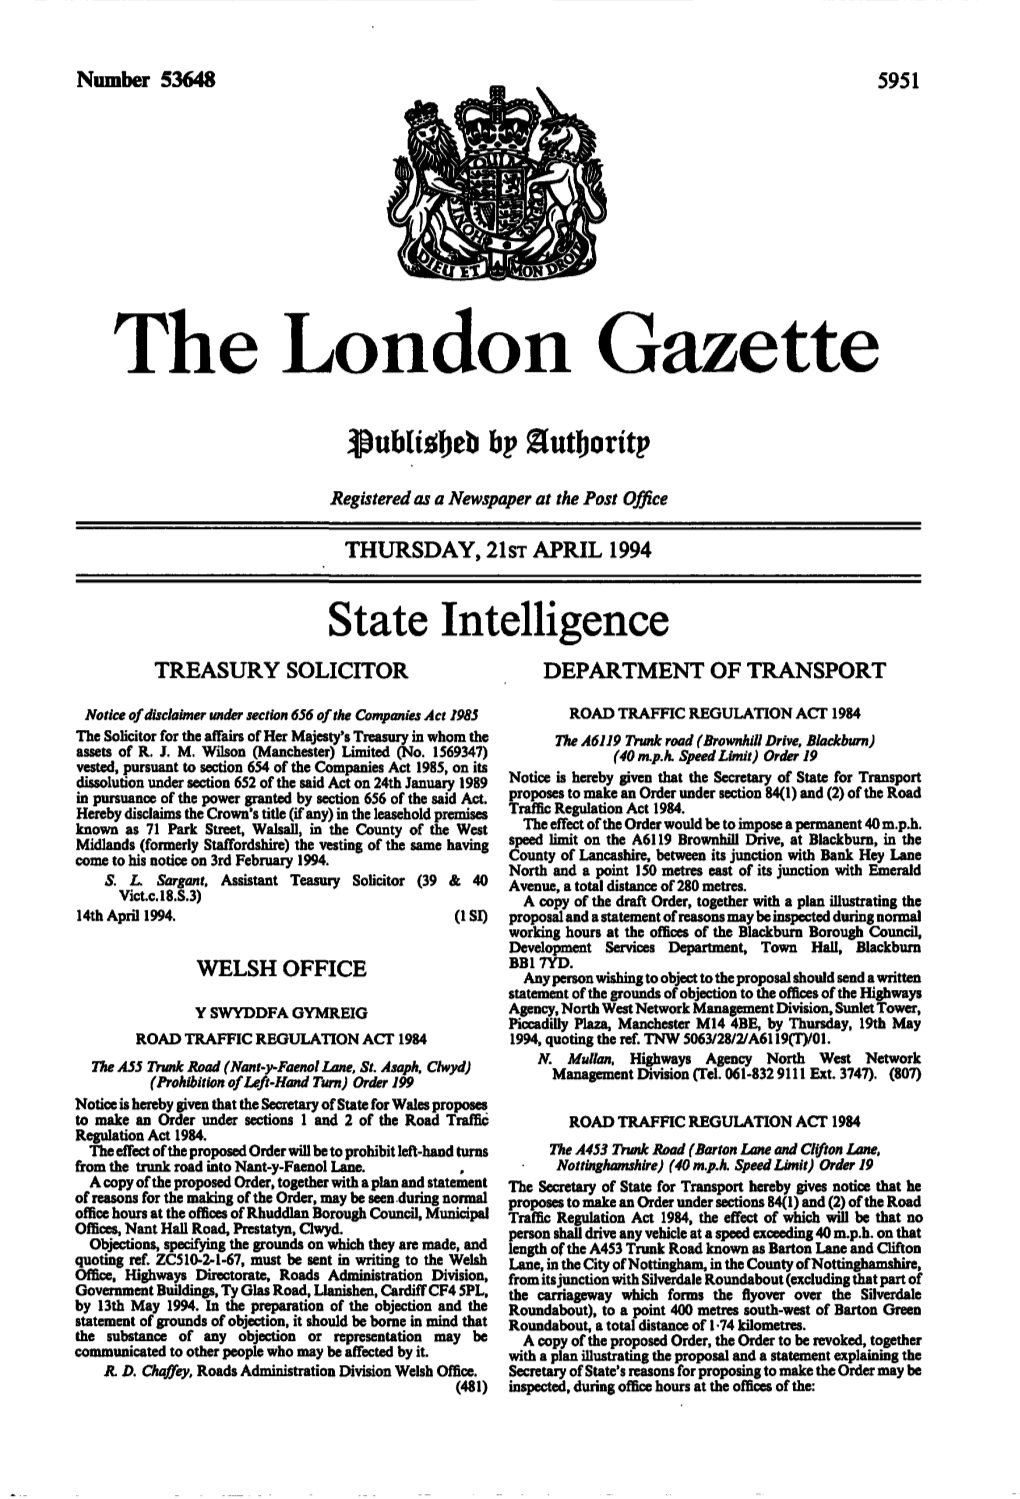 The London Gazette, Issue 53648